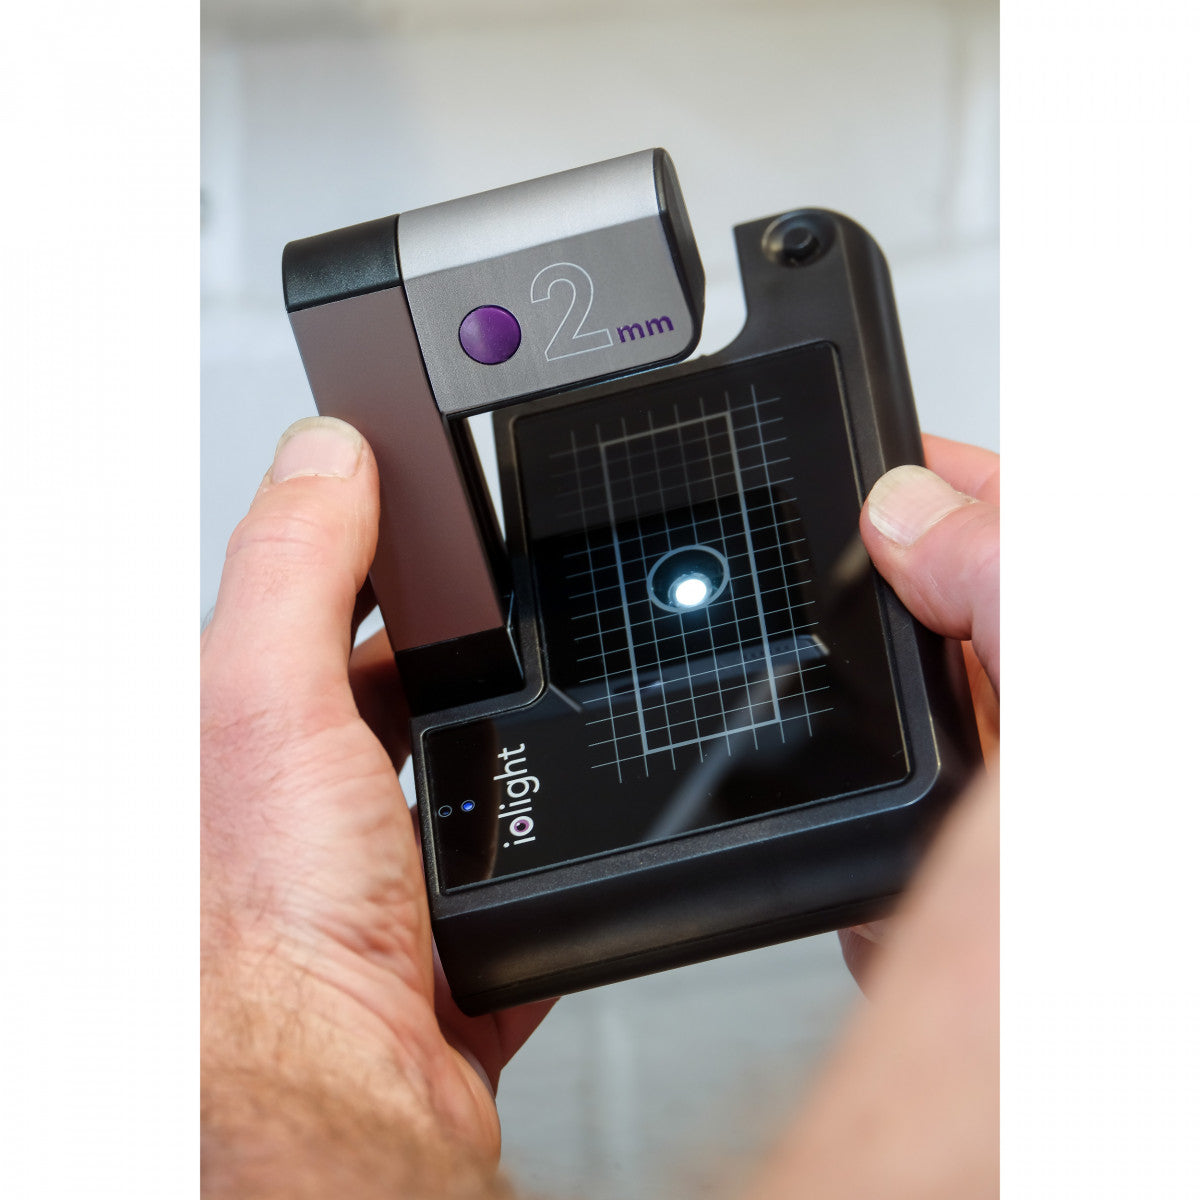 ioLight 2mm Digital Portable Microscope, 5 Megapixels - New York Microscope  Company